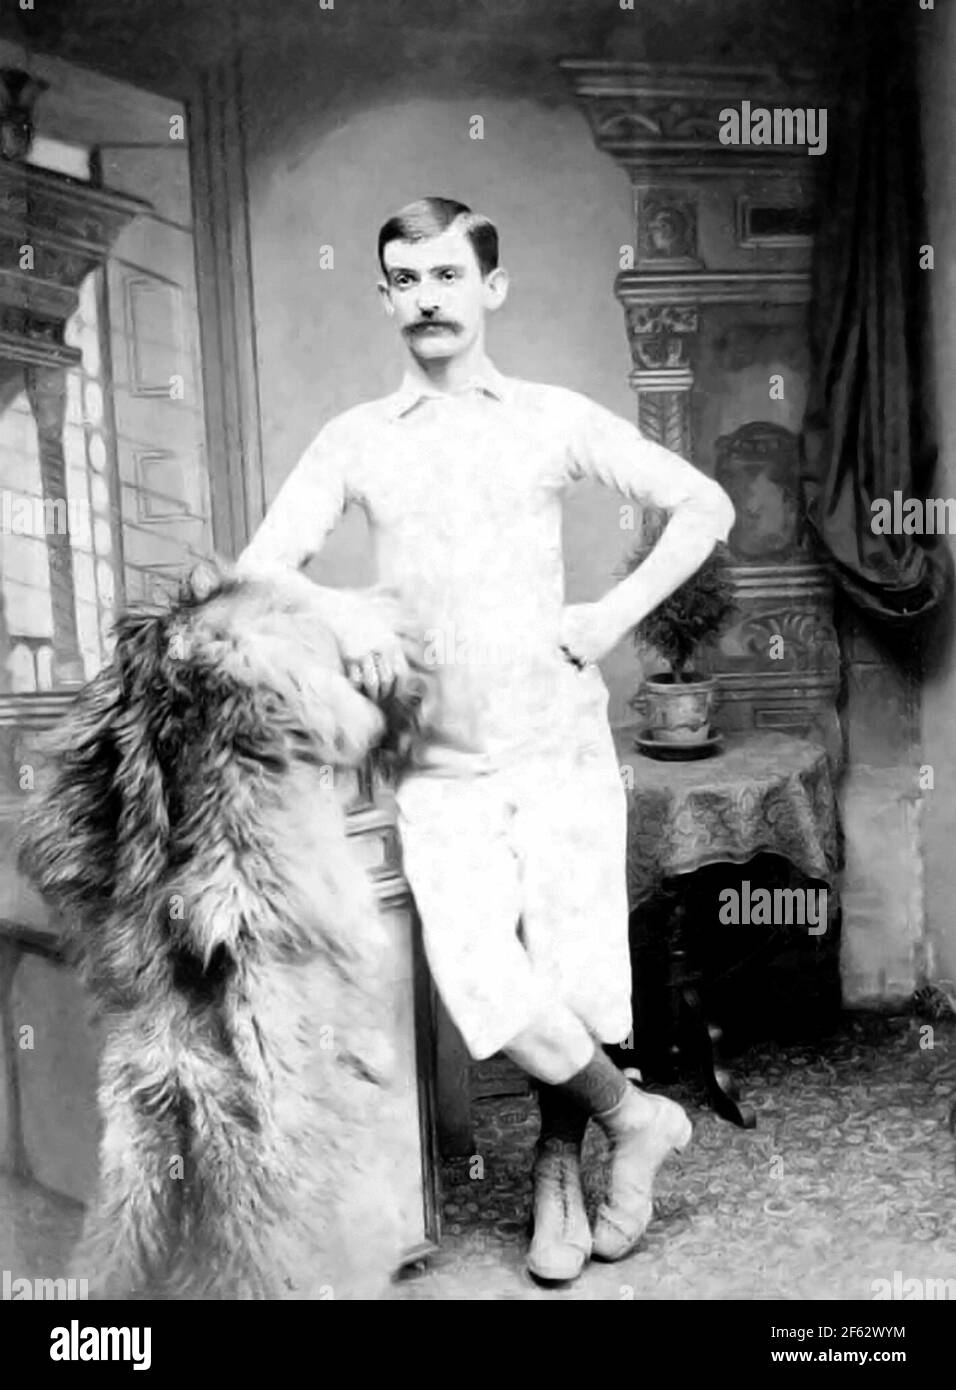 Fergus Suter. Portrait of the Scottish stonemason and footballer, Fergus “Fergie” Suter (1857-1916), c. 1880. Stock Photo